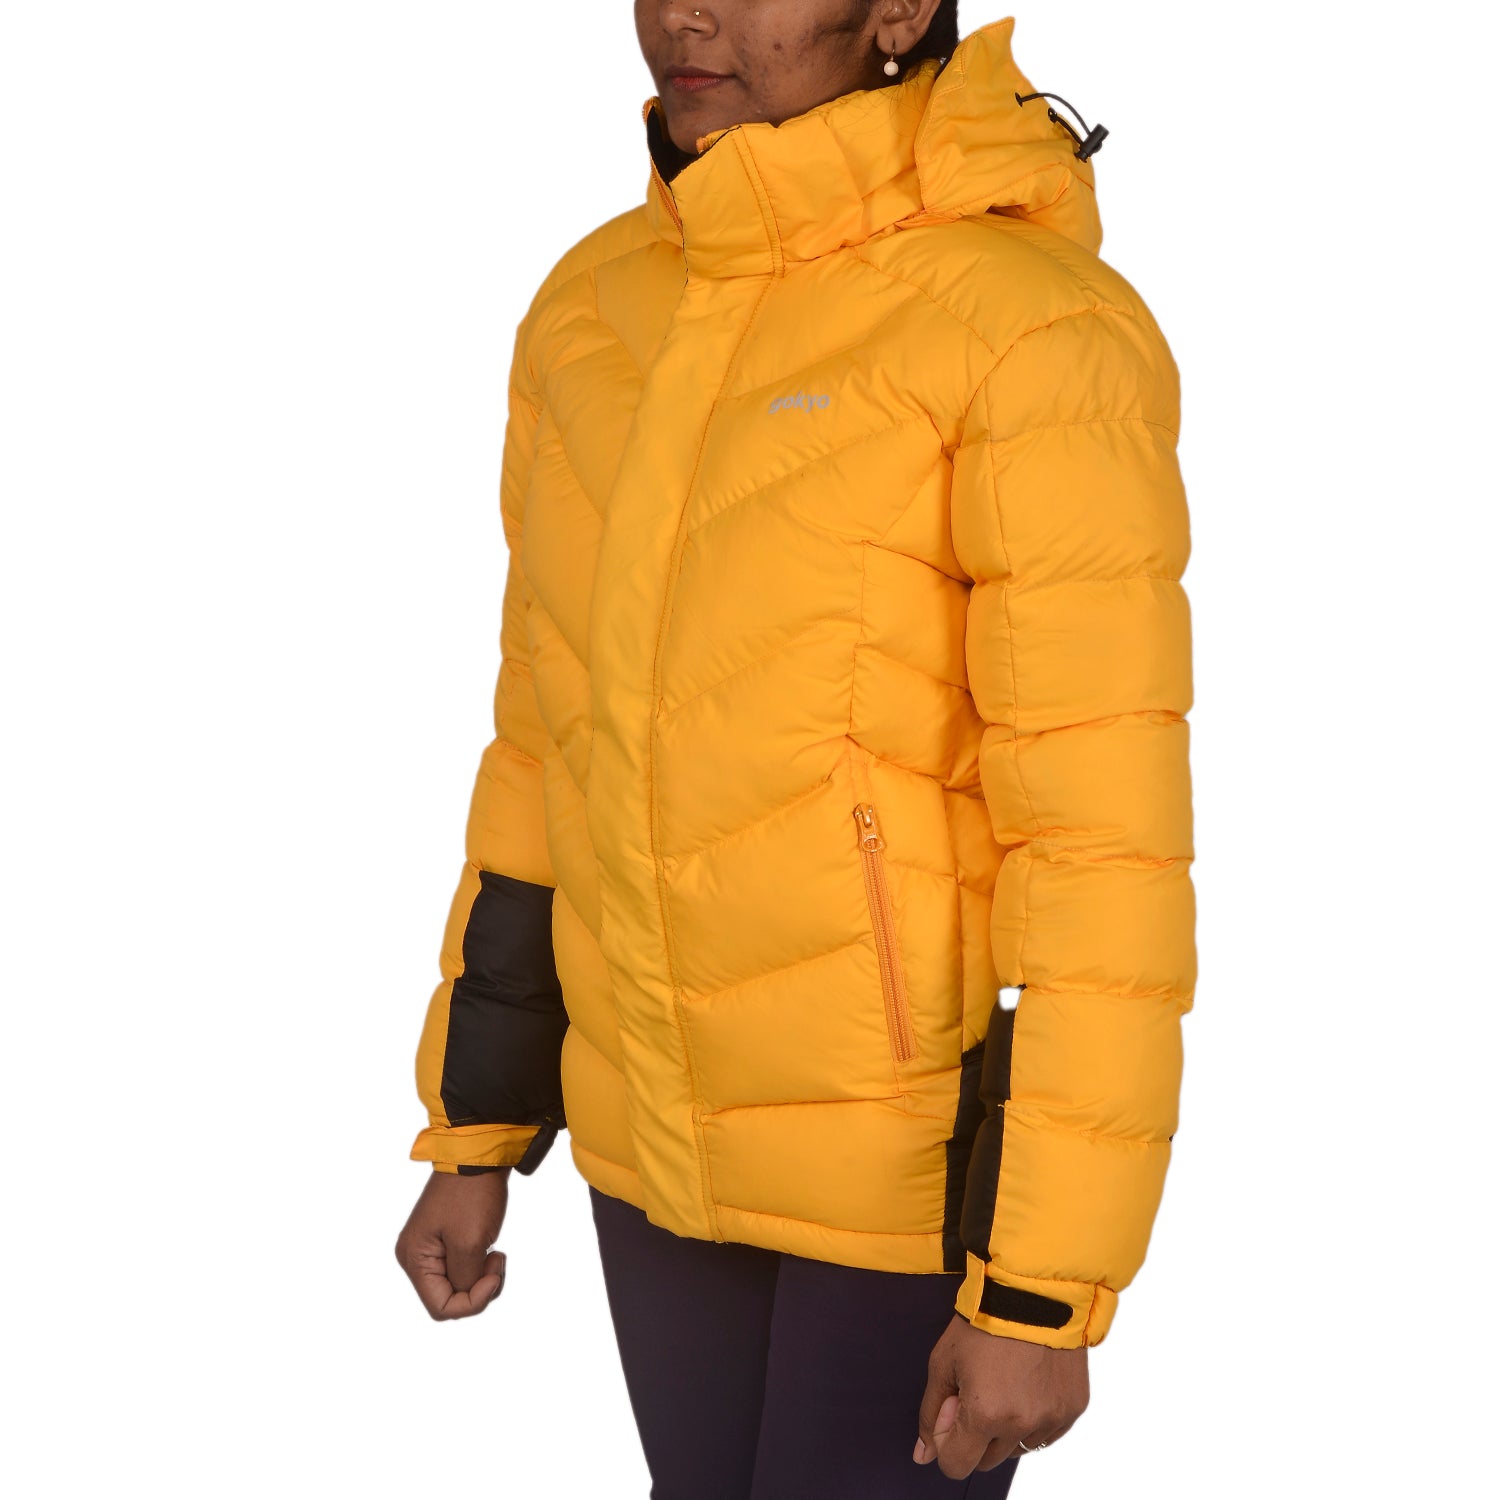 Buy Gokyo K2 Survivor Down Jacket - Women | Jackets at Gokyo Outdoor Clothing & Gear